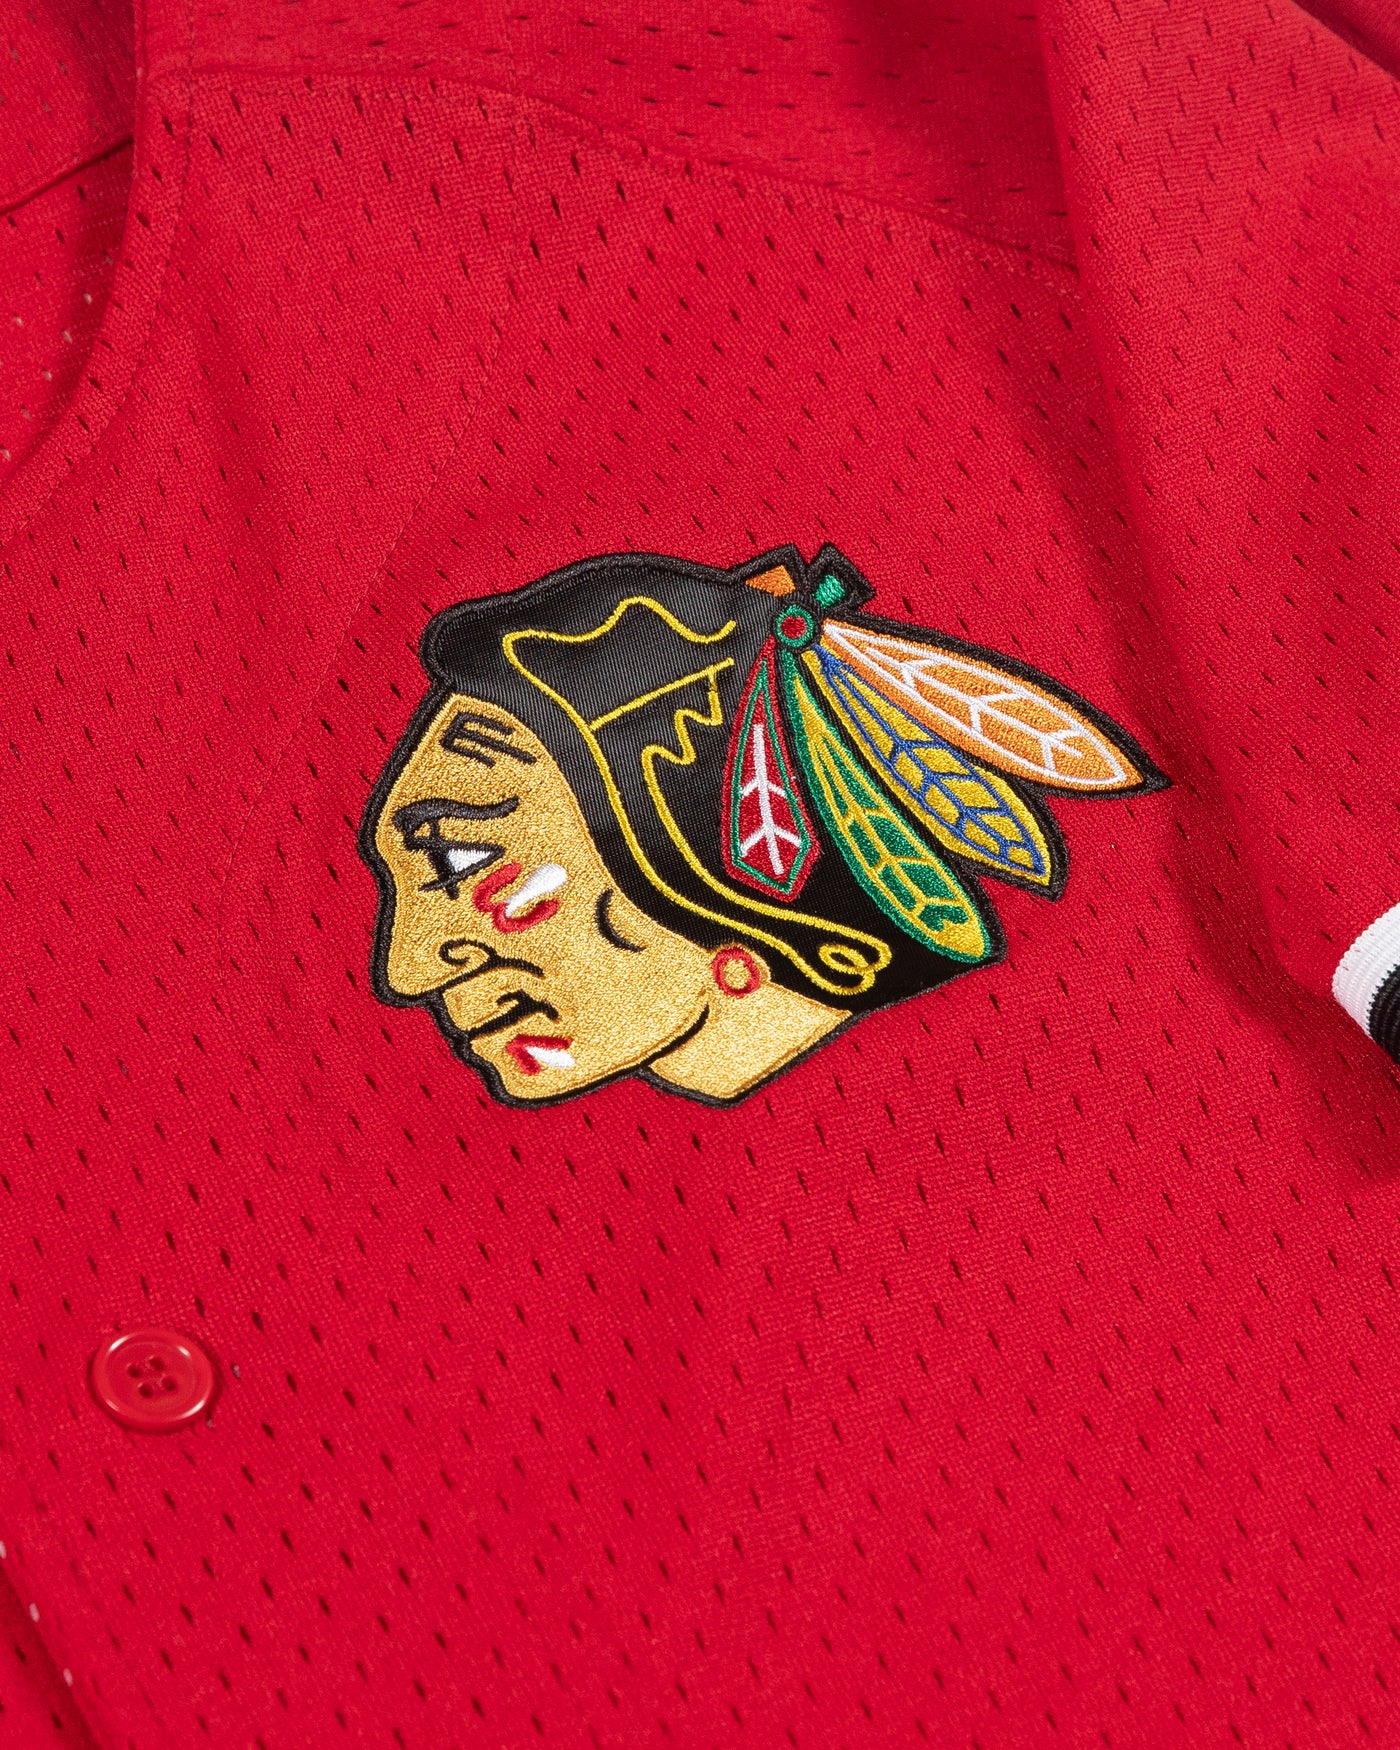 NHL Teams Chicago Blackhawks Logo Floral Baseball Jersey Shirt For